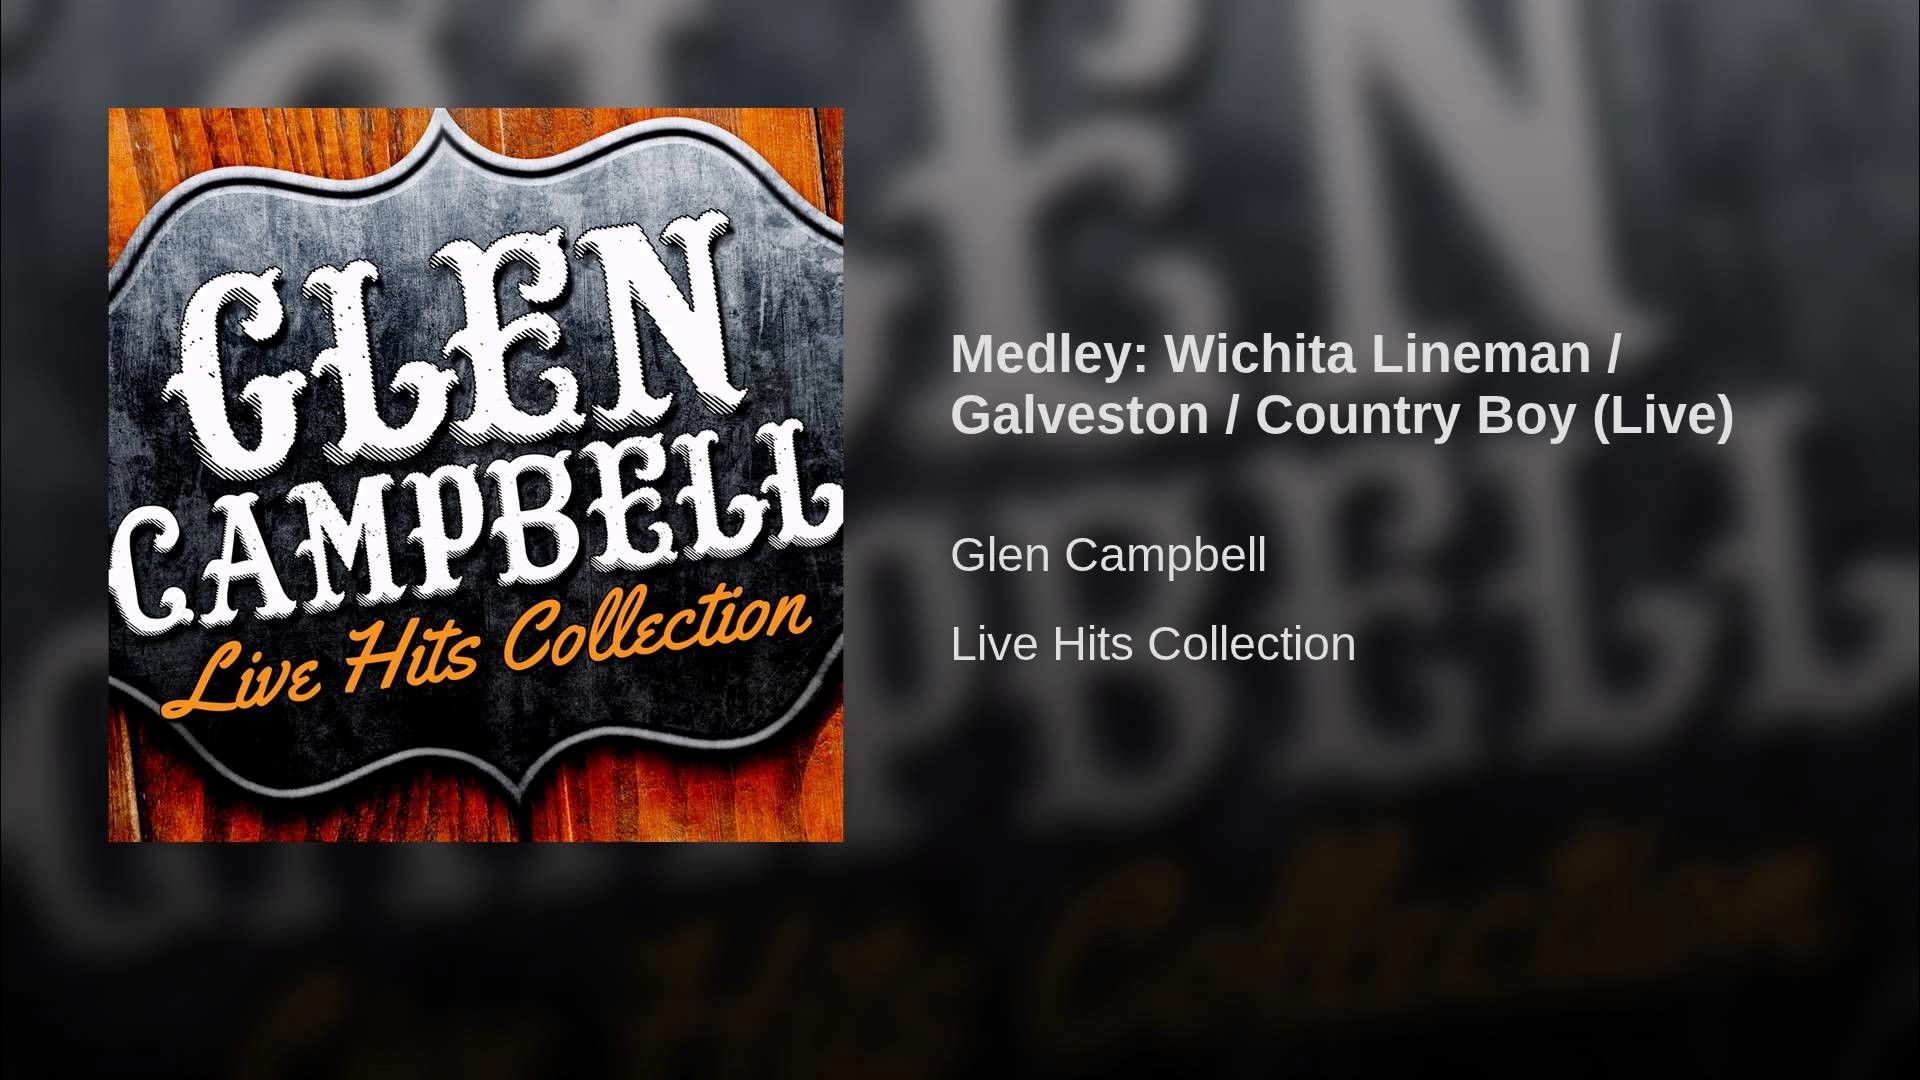 1920x1080 Medley: Wichita Lineman / Galveston / Country Boy (Live)